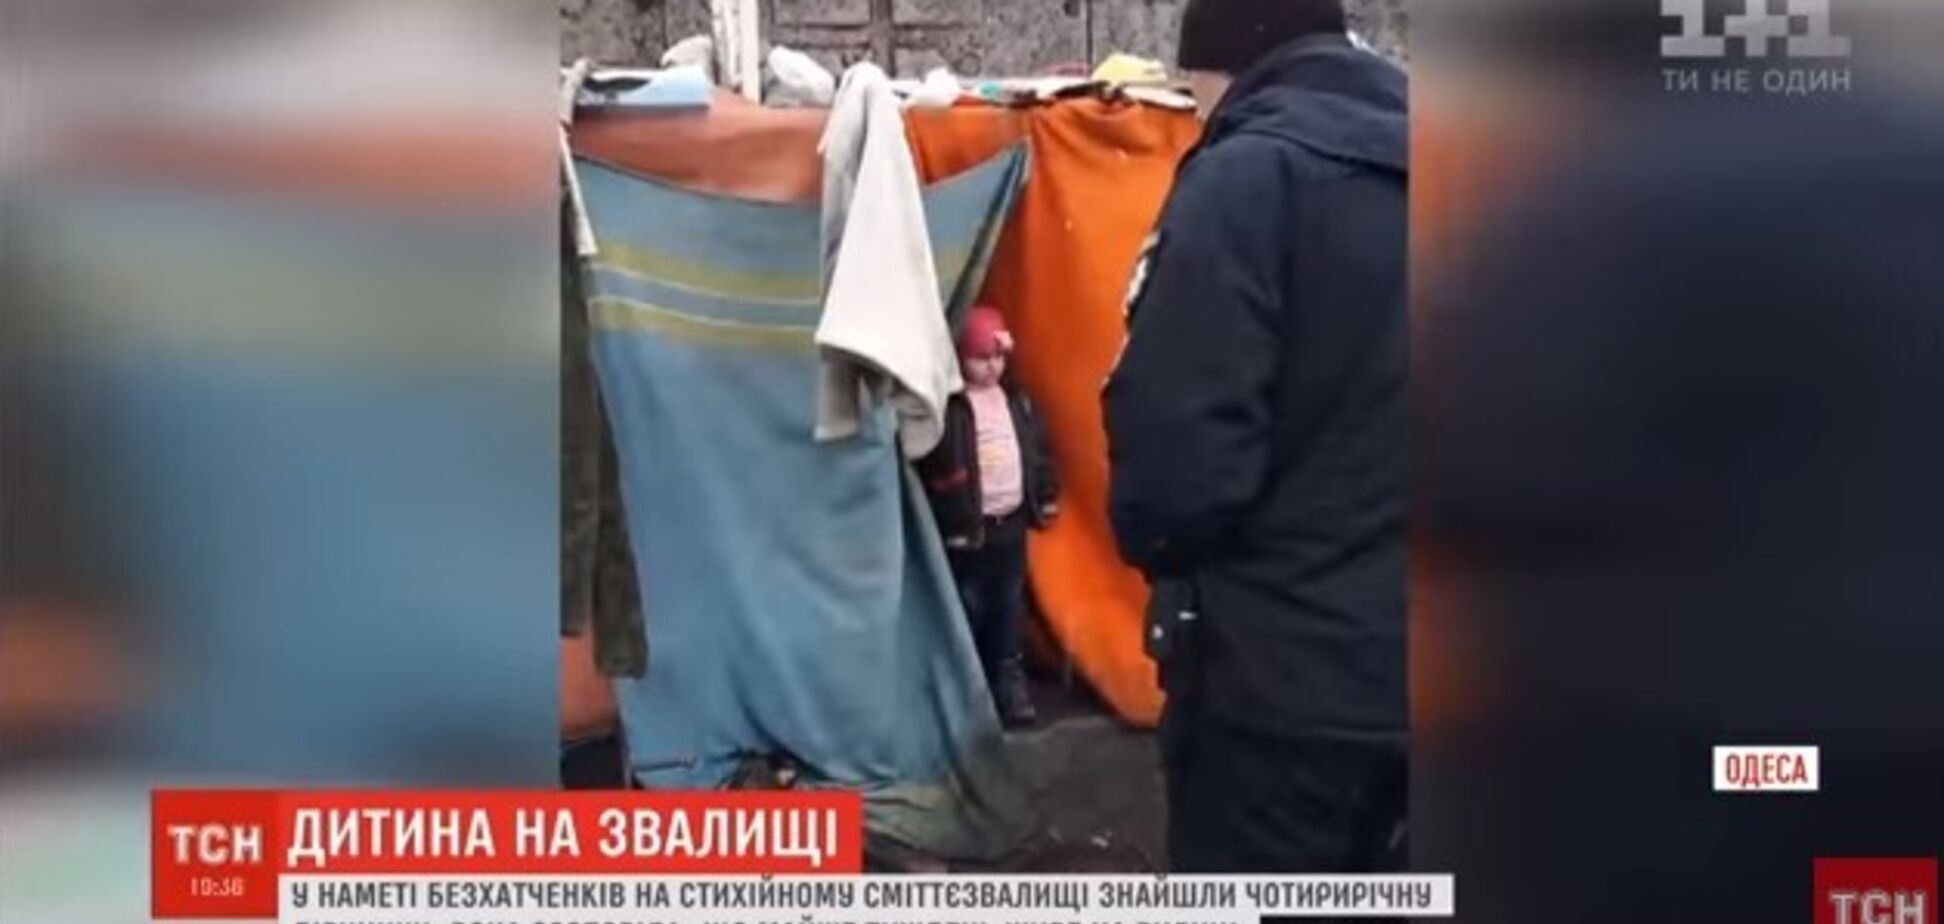 В Одессе отец покинул ребенка на свалке